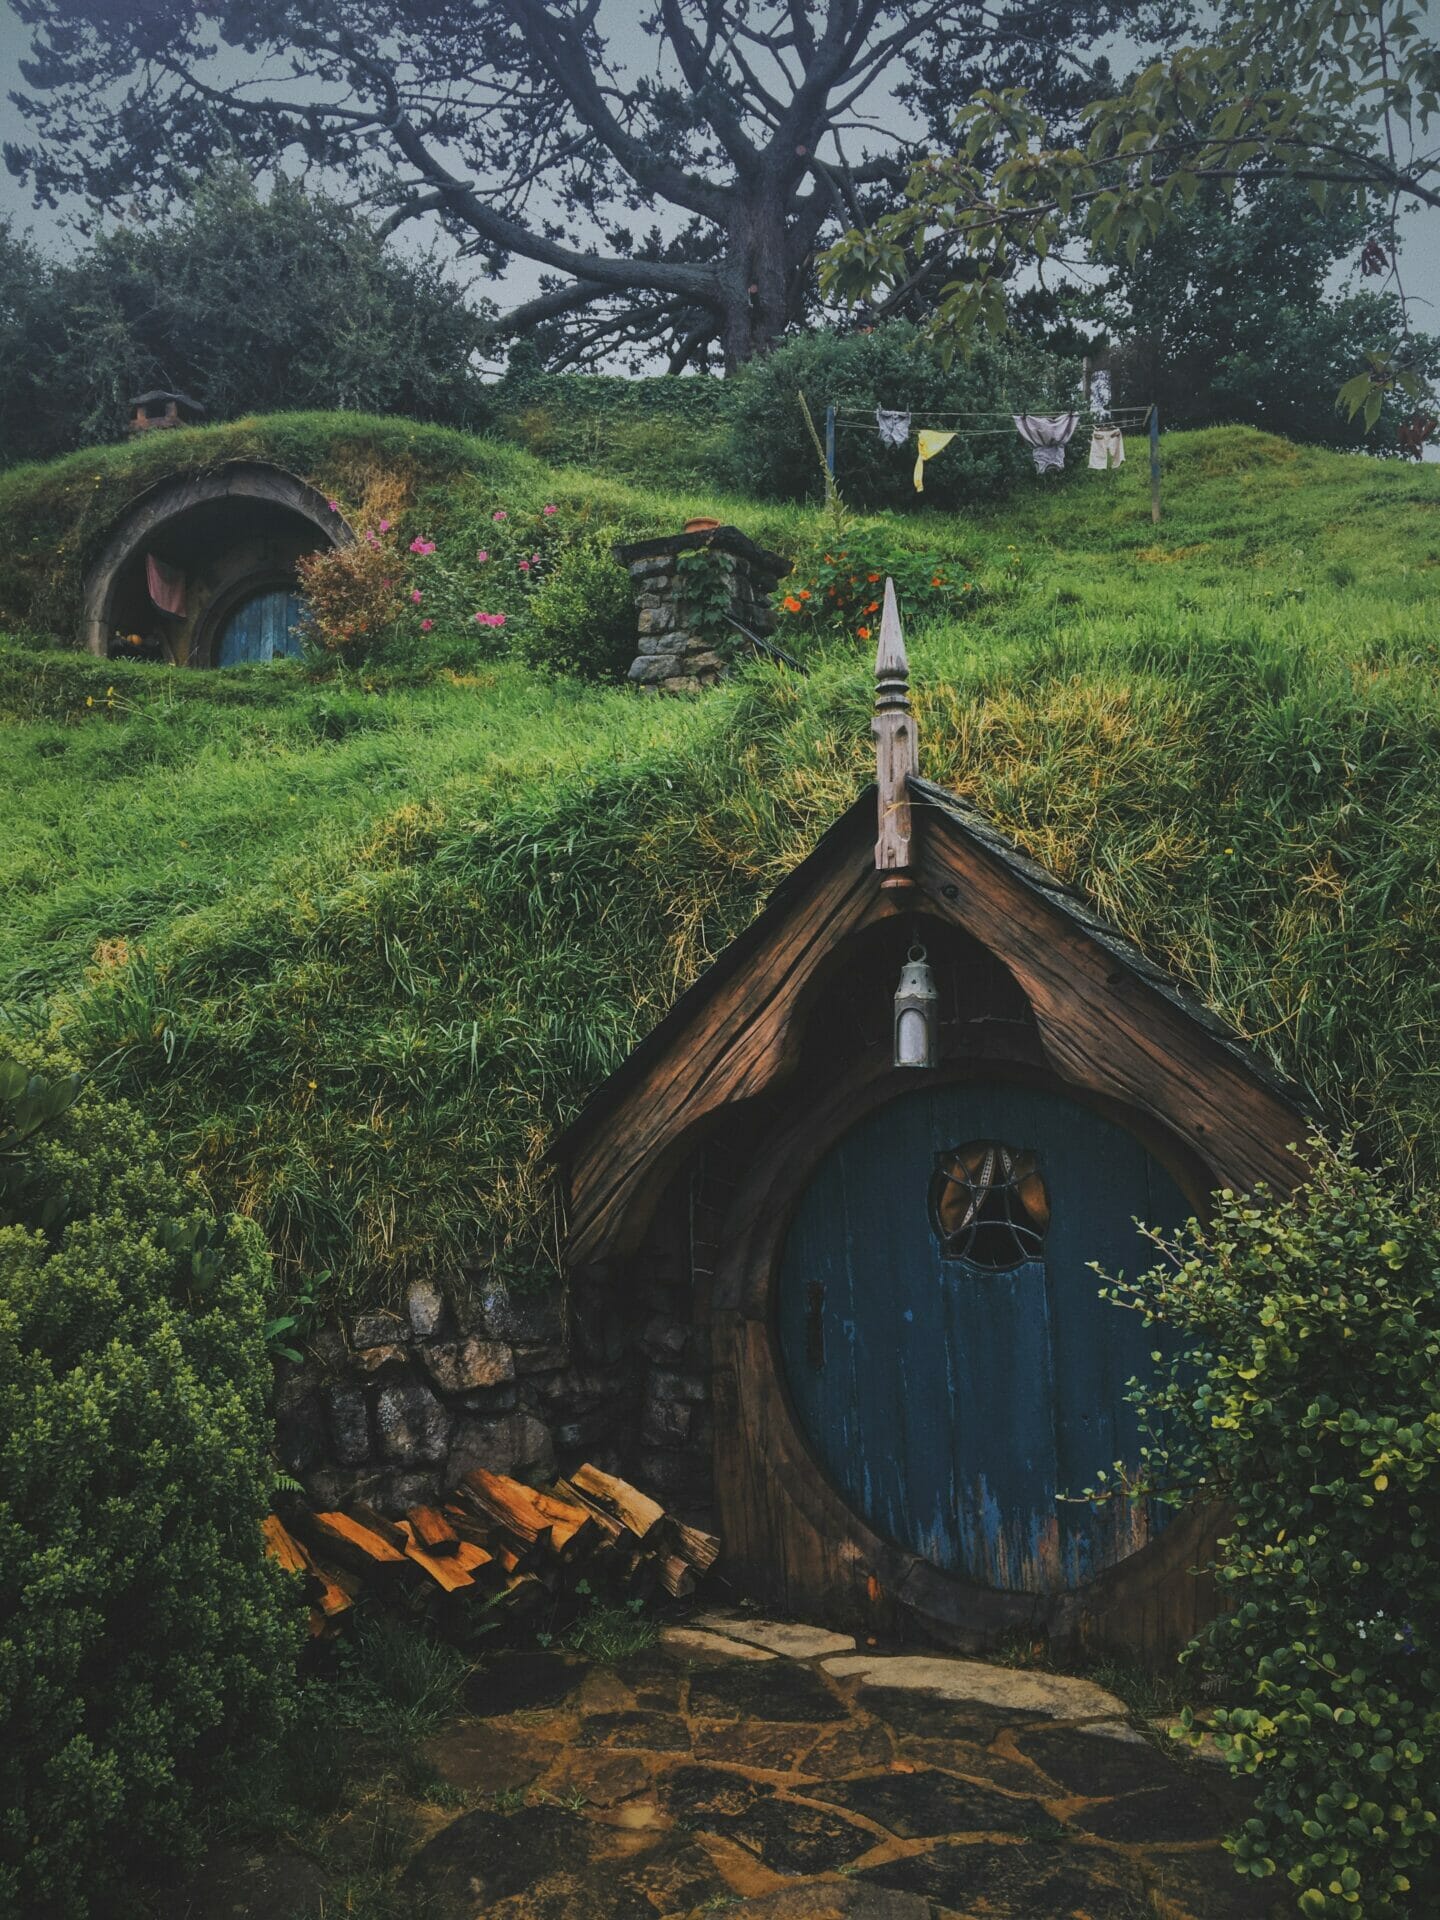 Met gras overdekte hobbit-woning in de Shire uit Lord of the Rings